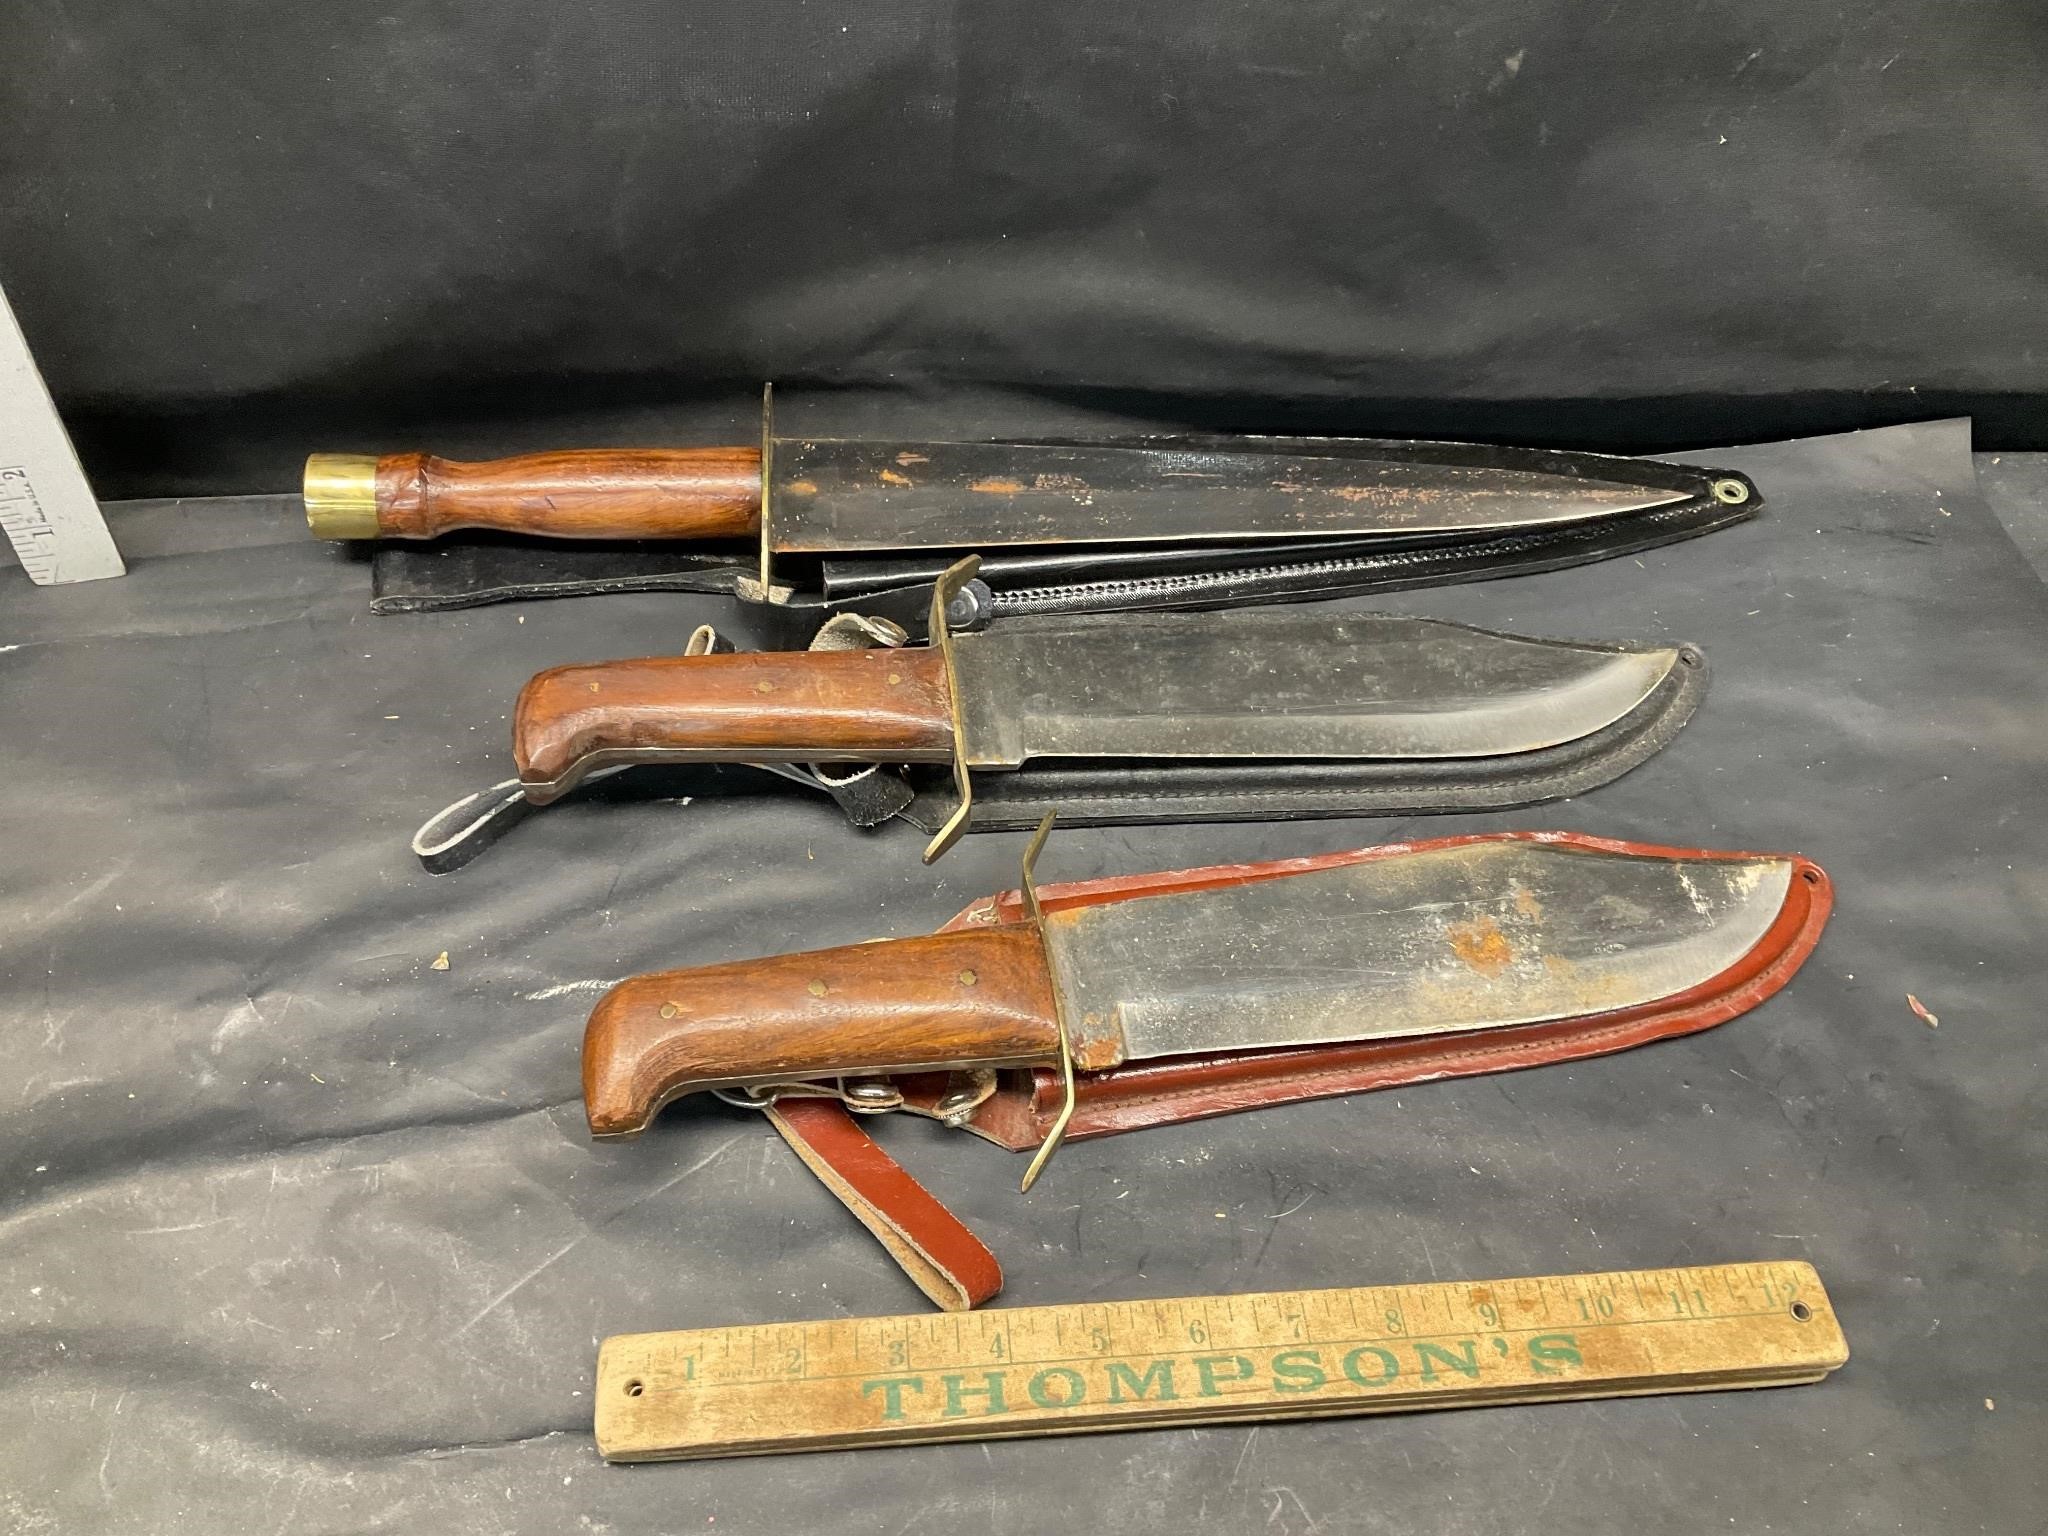 3 large knives